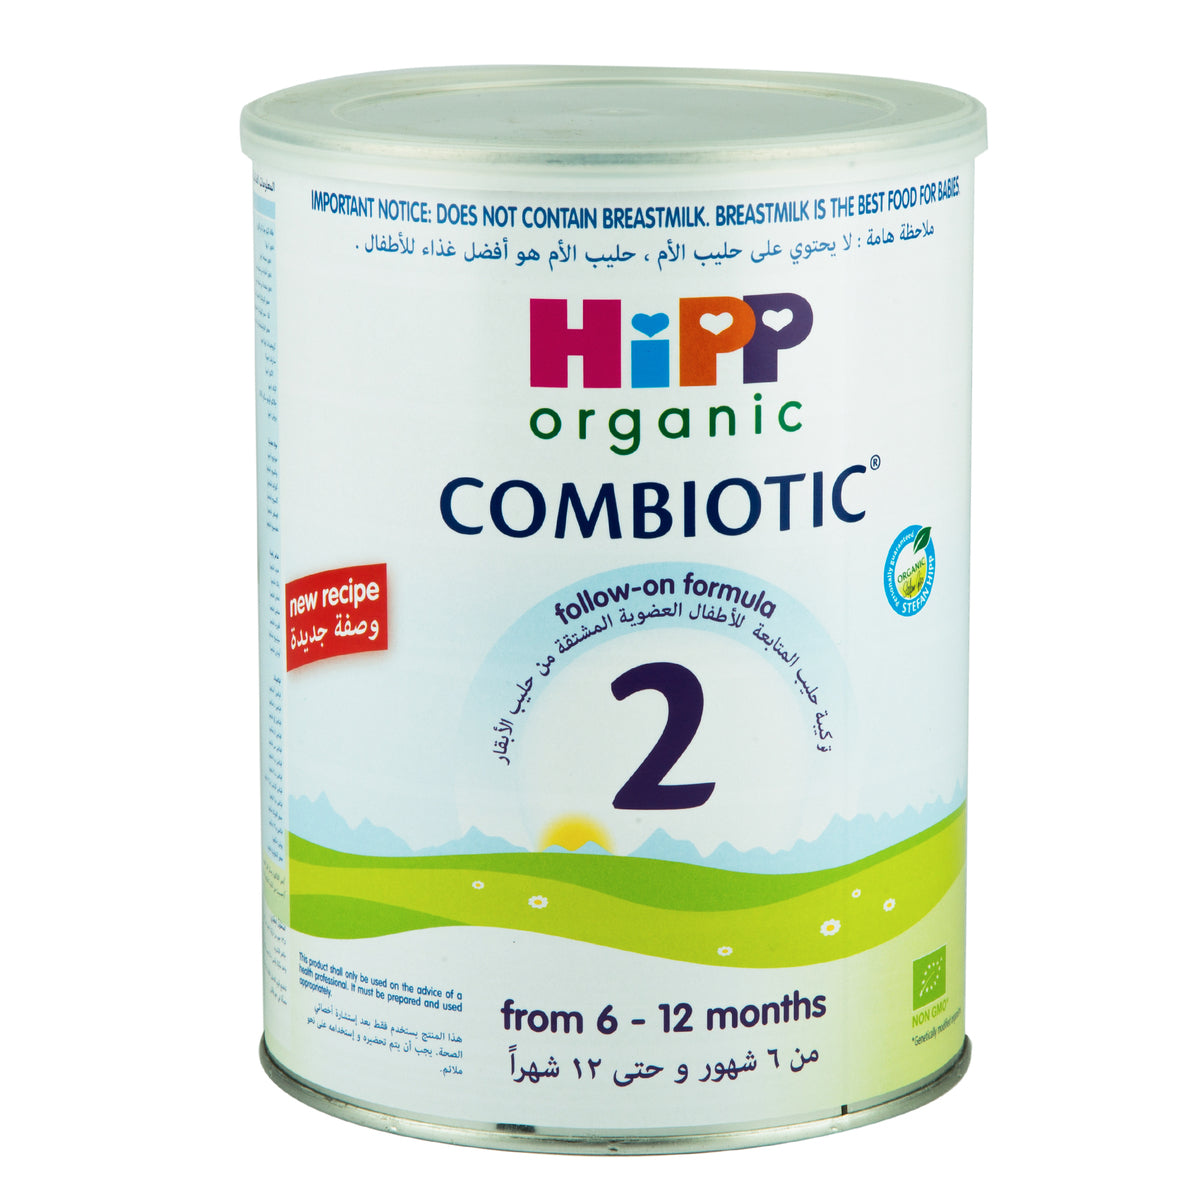 HIPP ORGANIC Combiotic Follow-On Formula, 800g